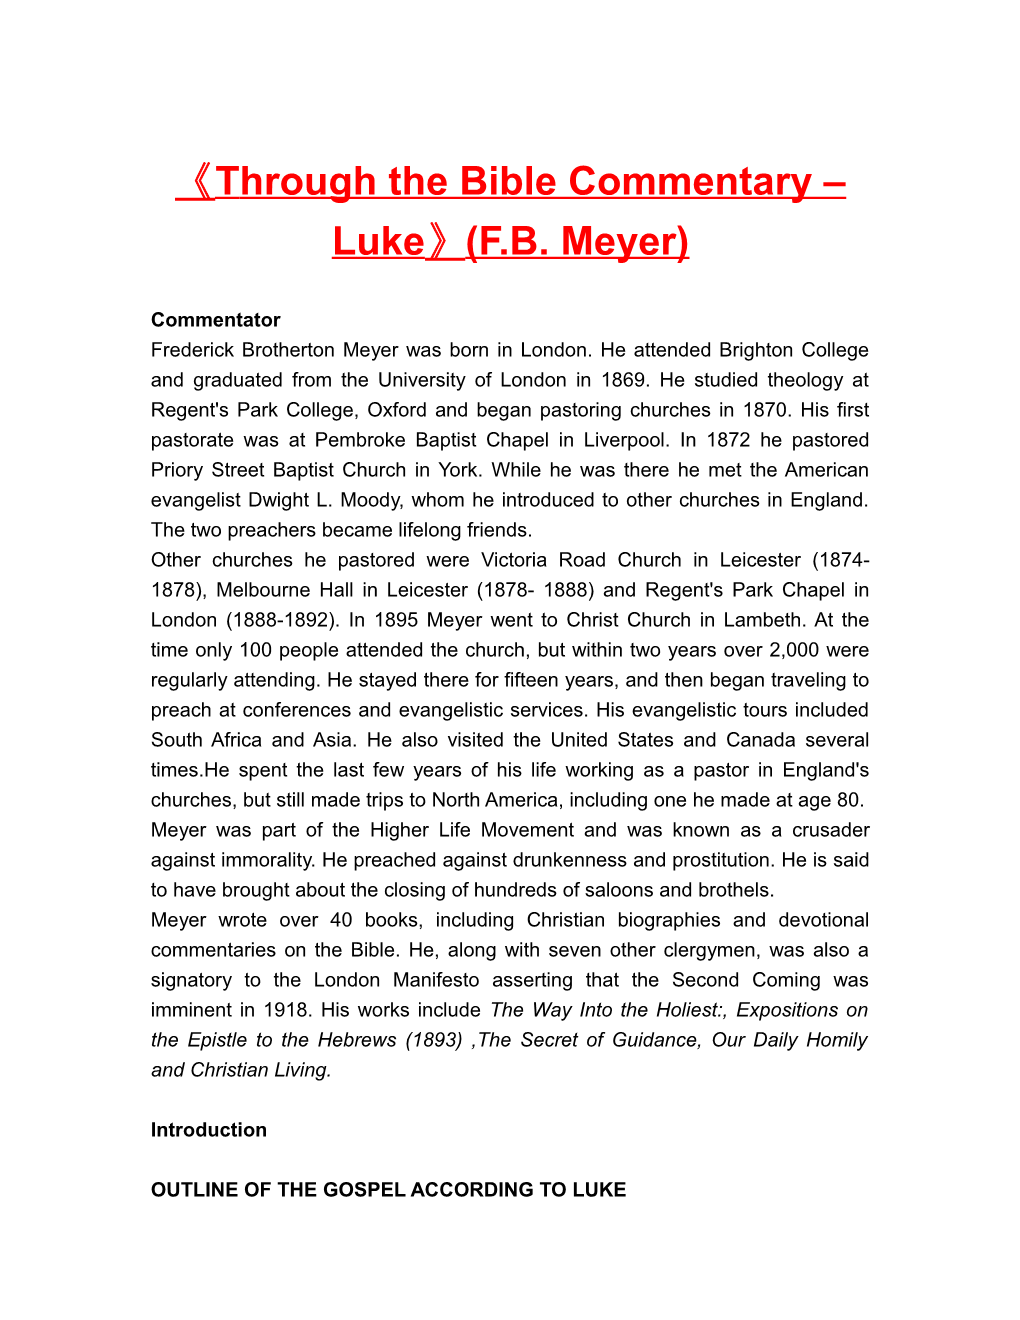 Through the Bible Commentary Luke (F.B. Meyer)